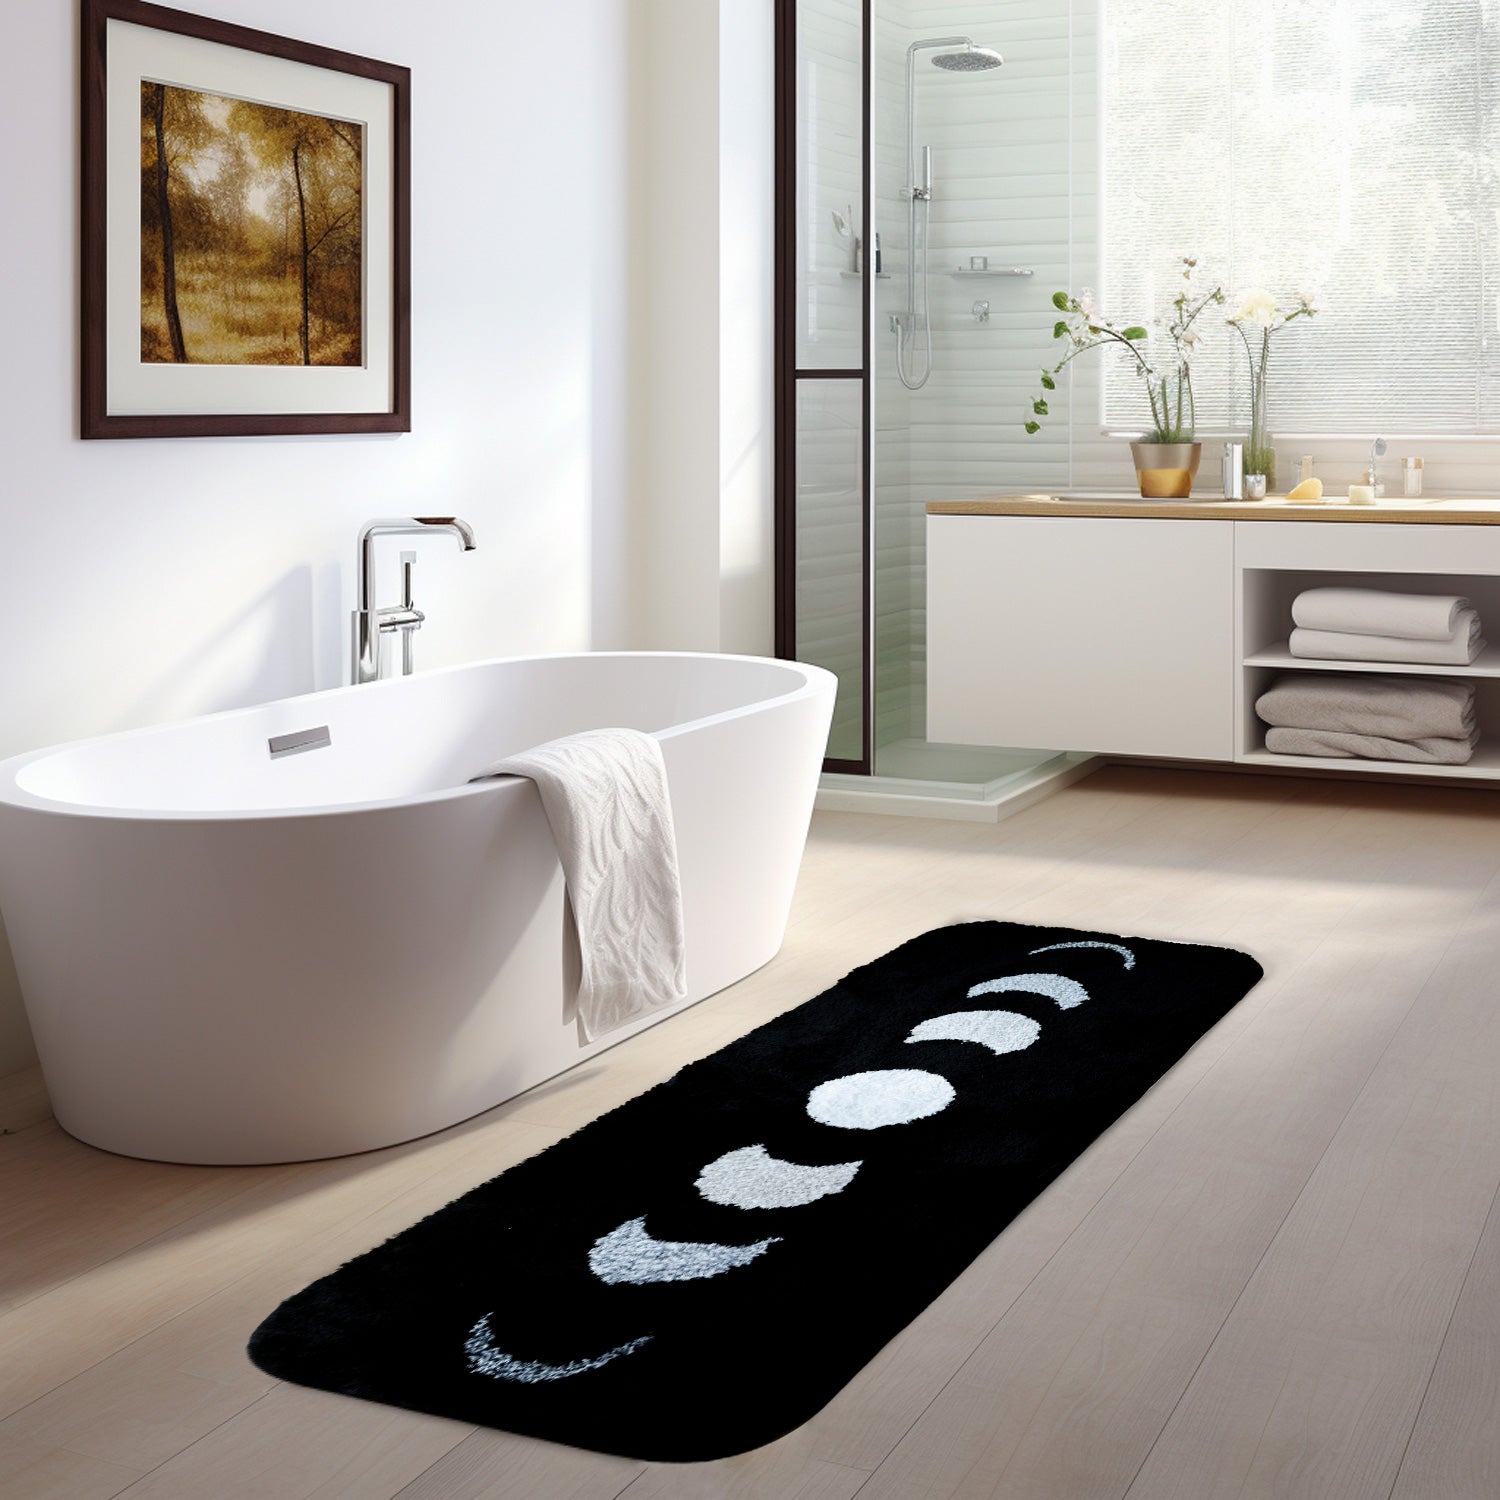 Feblilac Black Bedroom Rug Long Runner, Moon Pattern Rug for Bedside Bathroom, Water Absorbent Non-Slip Area Rug Mat for Home Decor